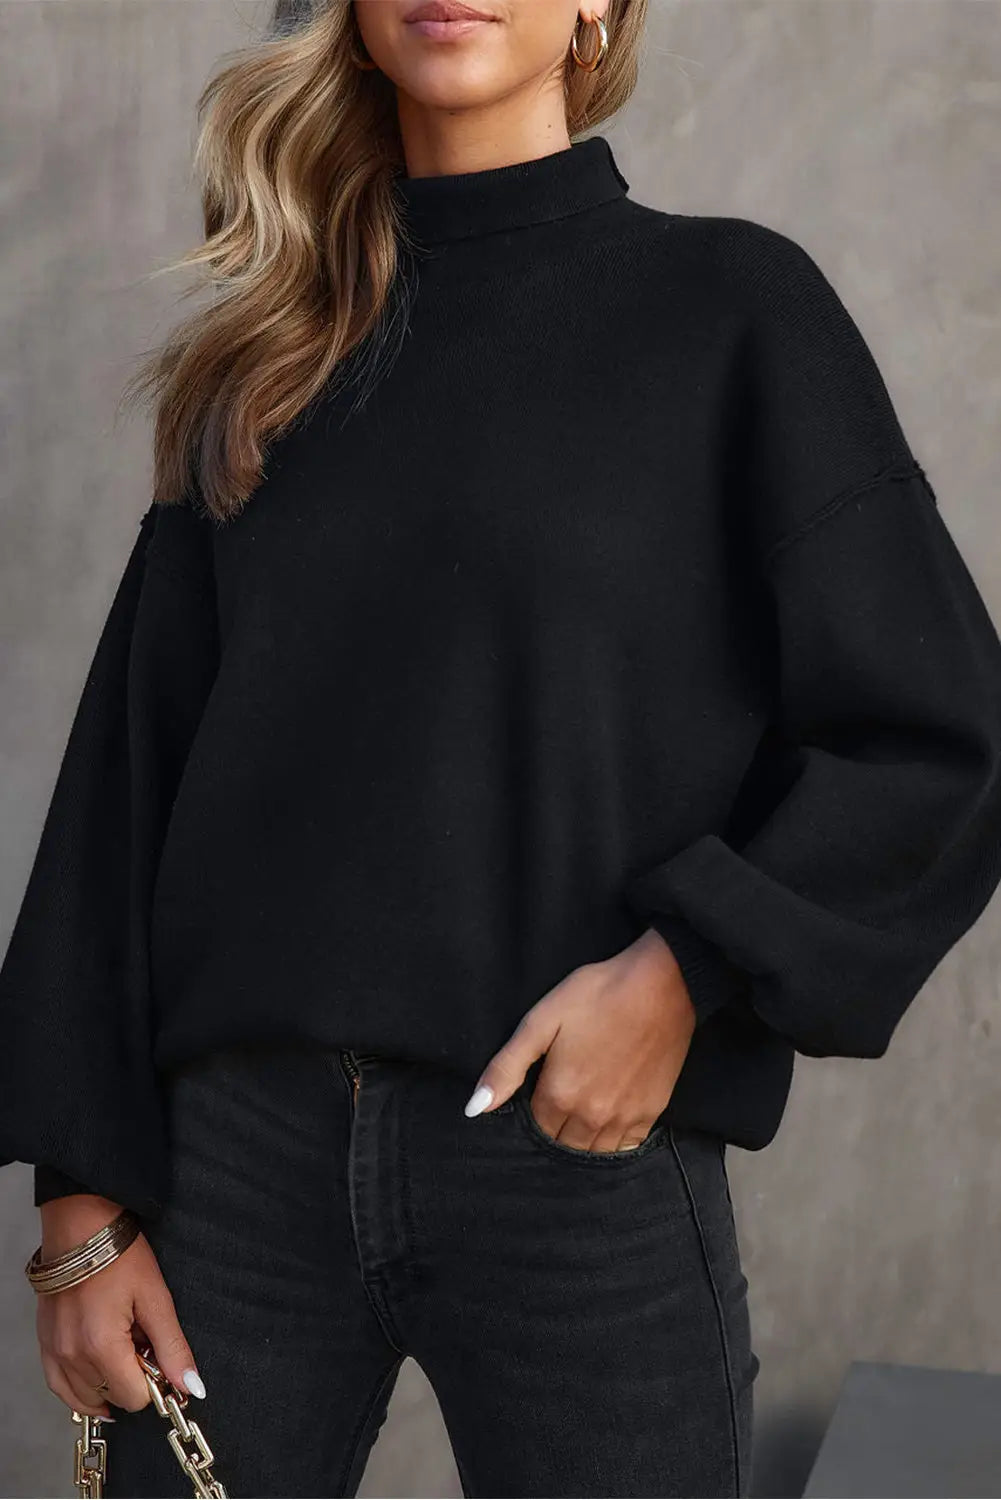 Black turtleneck drop shoulder bubble sleeve knit sweater - s / 50% viscose + 28% polyester + 22% polyamide - sweaters